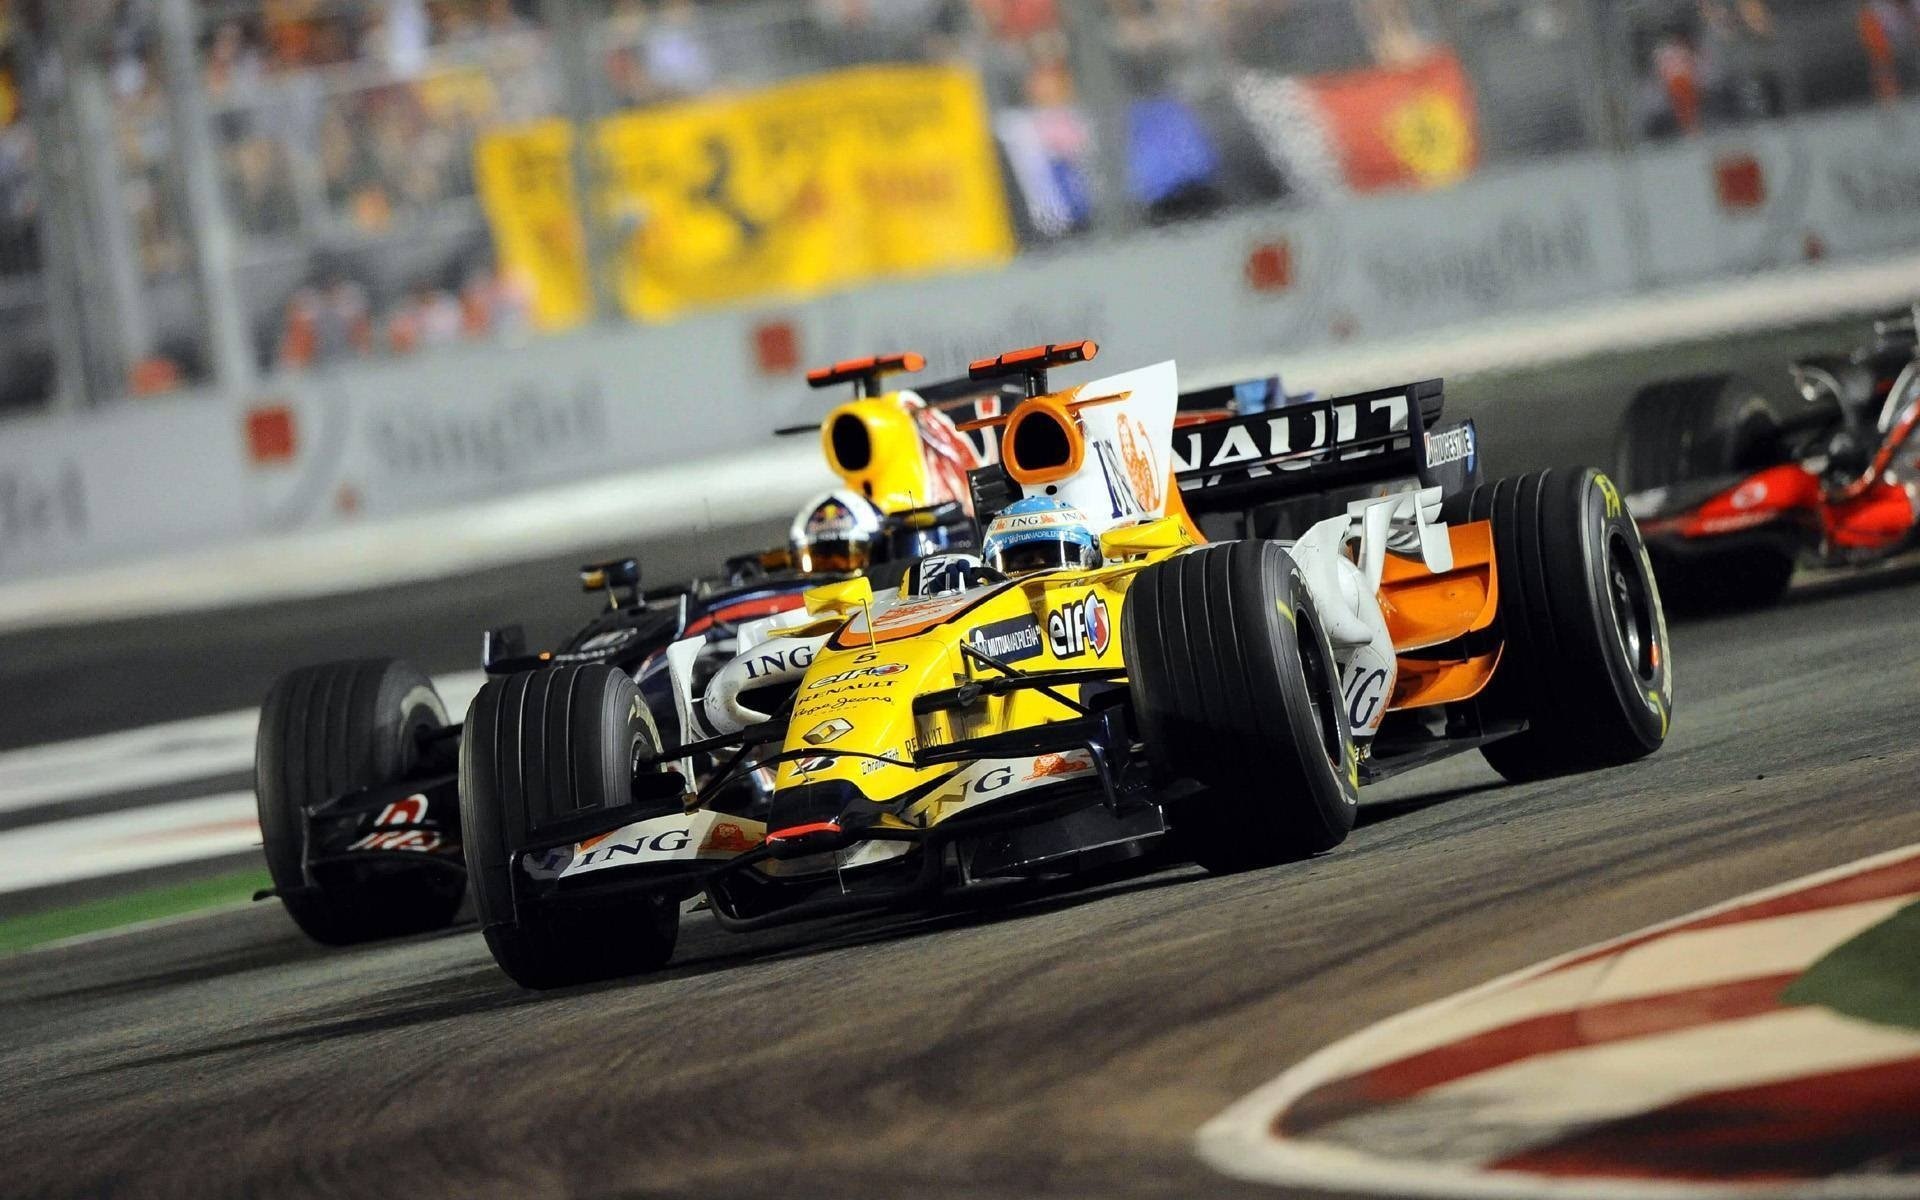 Renault car during the Formula 1 race